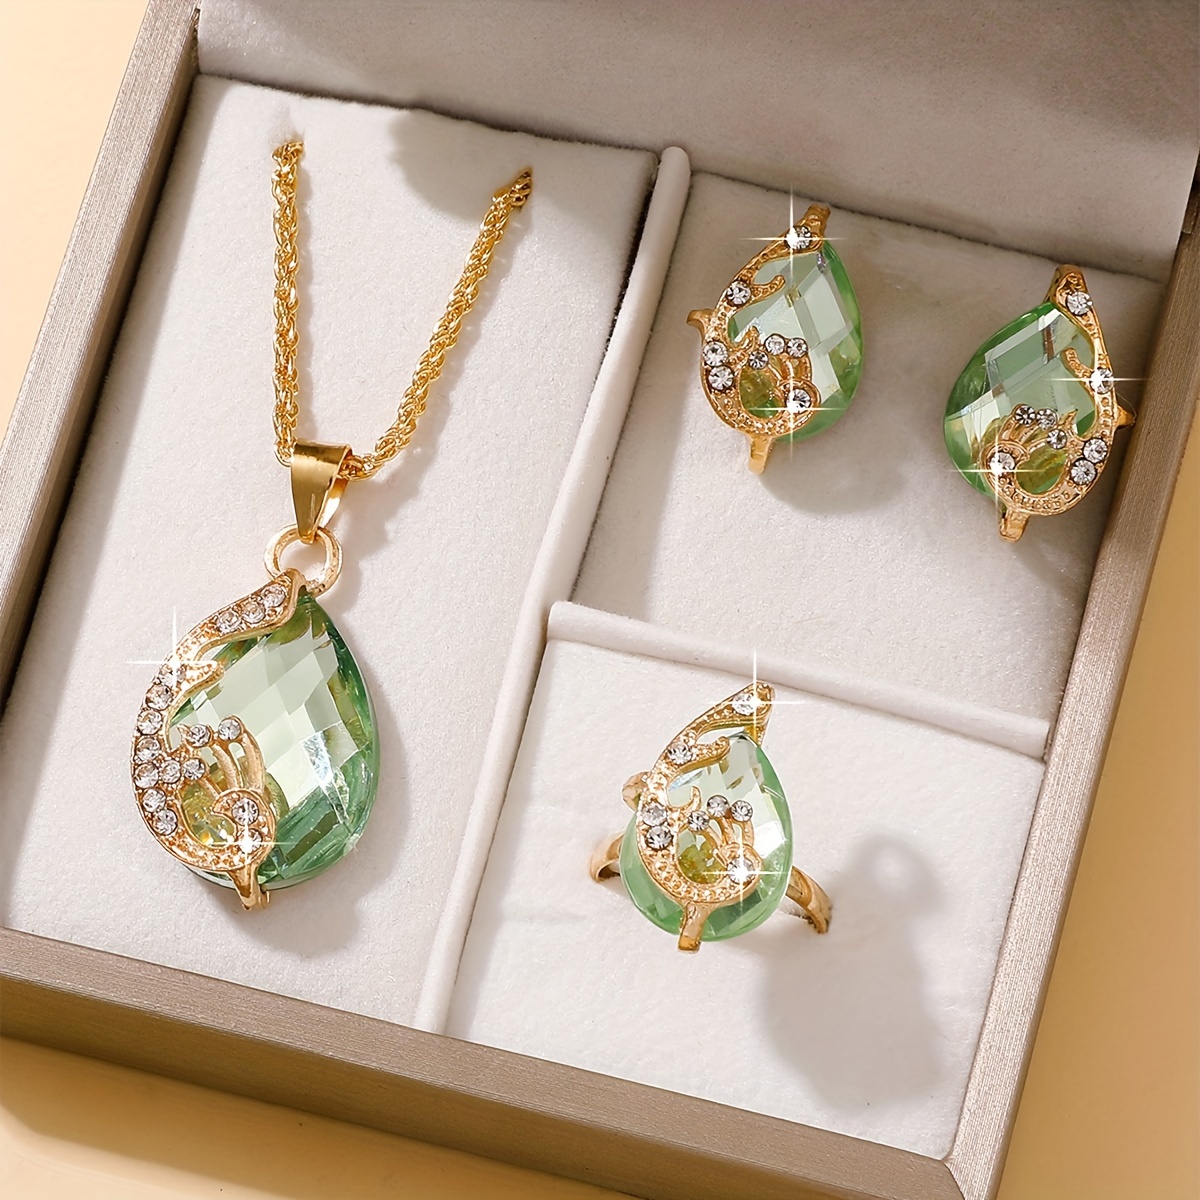 

Elegant Women's Fashion Jewelry Set, Luxurious Teardrop Glass Rhinestone Pendant Necklace And Earrings & Ring Set, Glamorous Female Gift